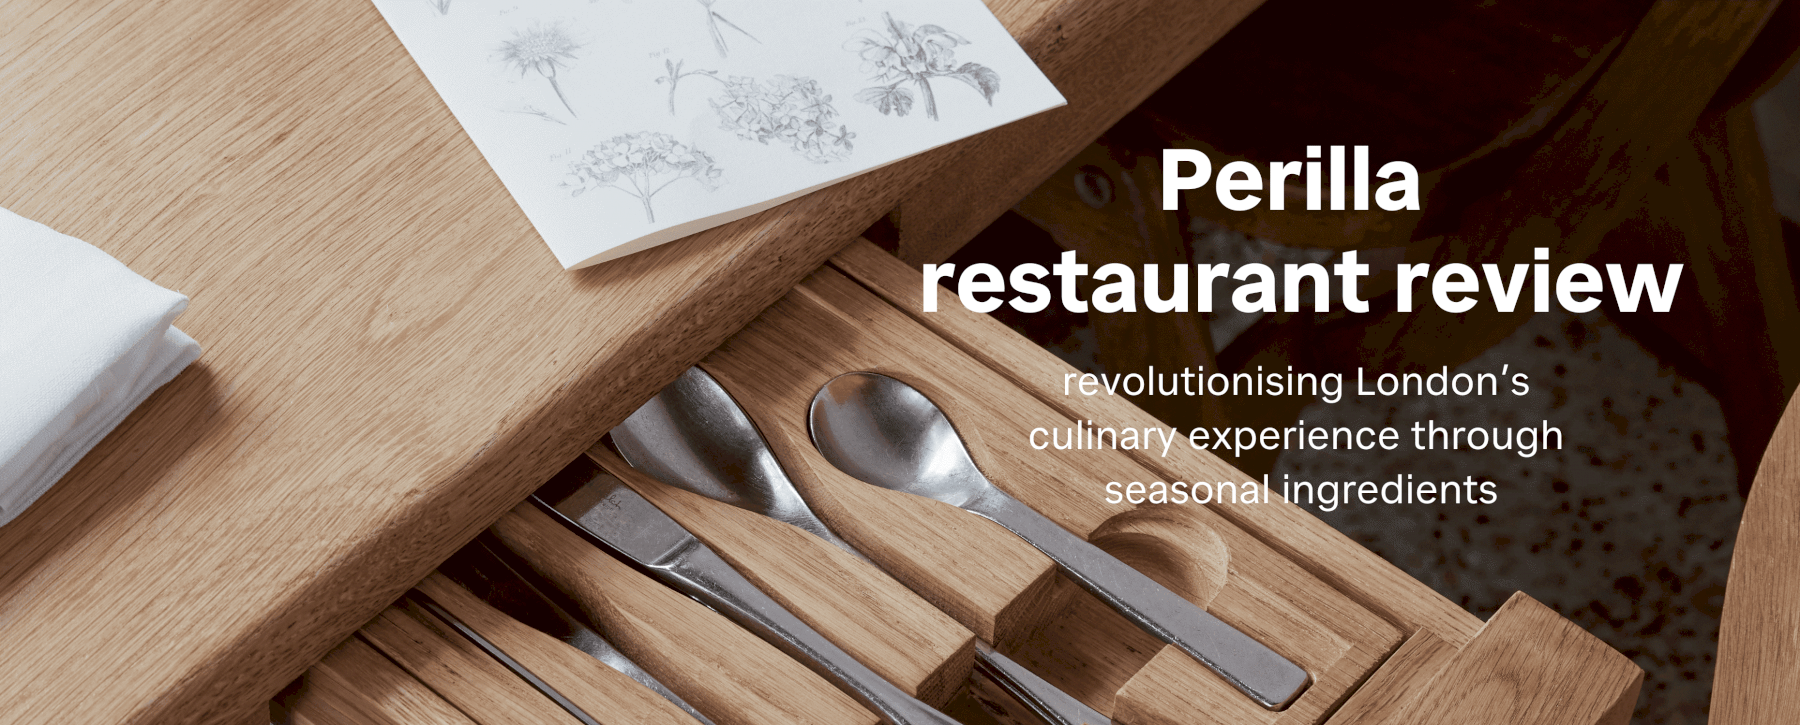 Perilla restaurant review — revolutionising London’s culinary experience through seasonal ingredients